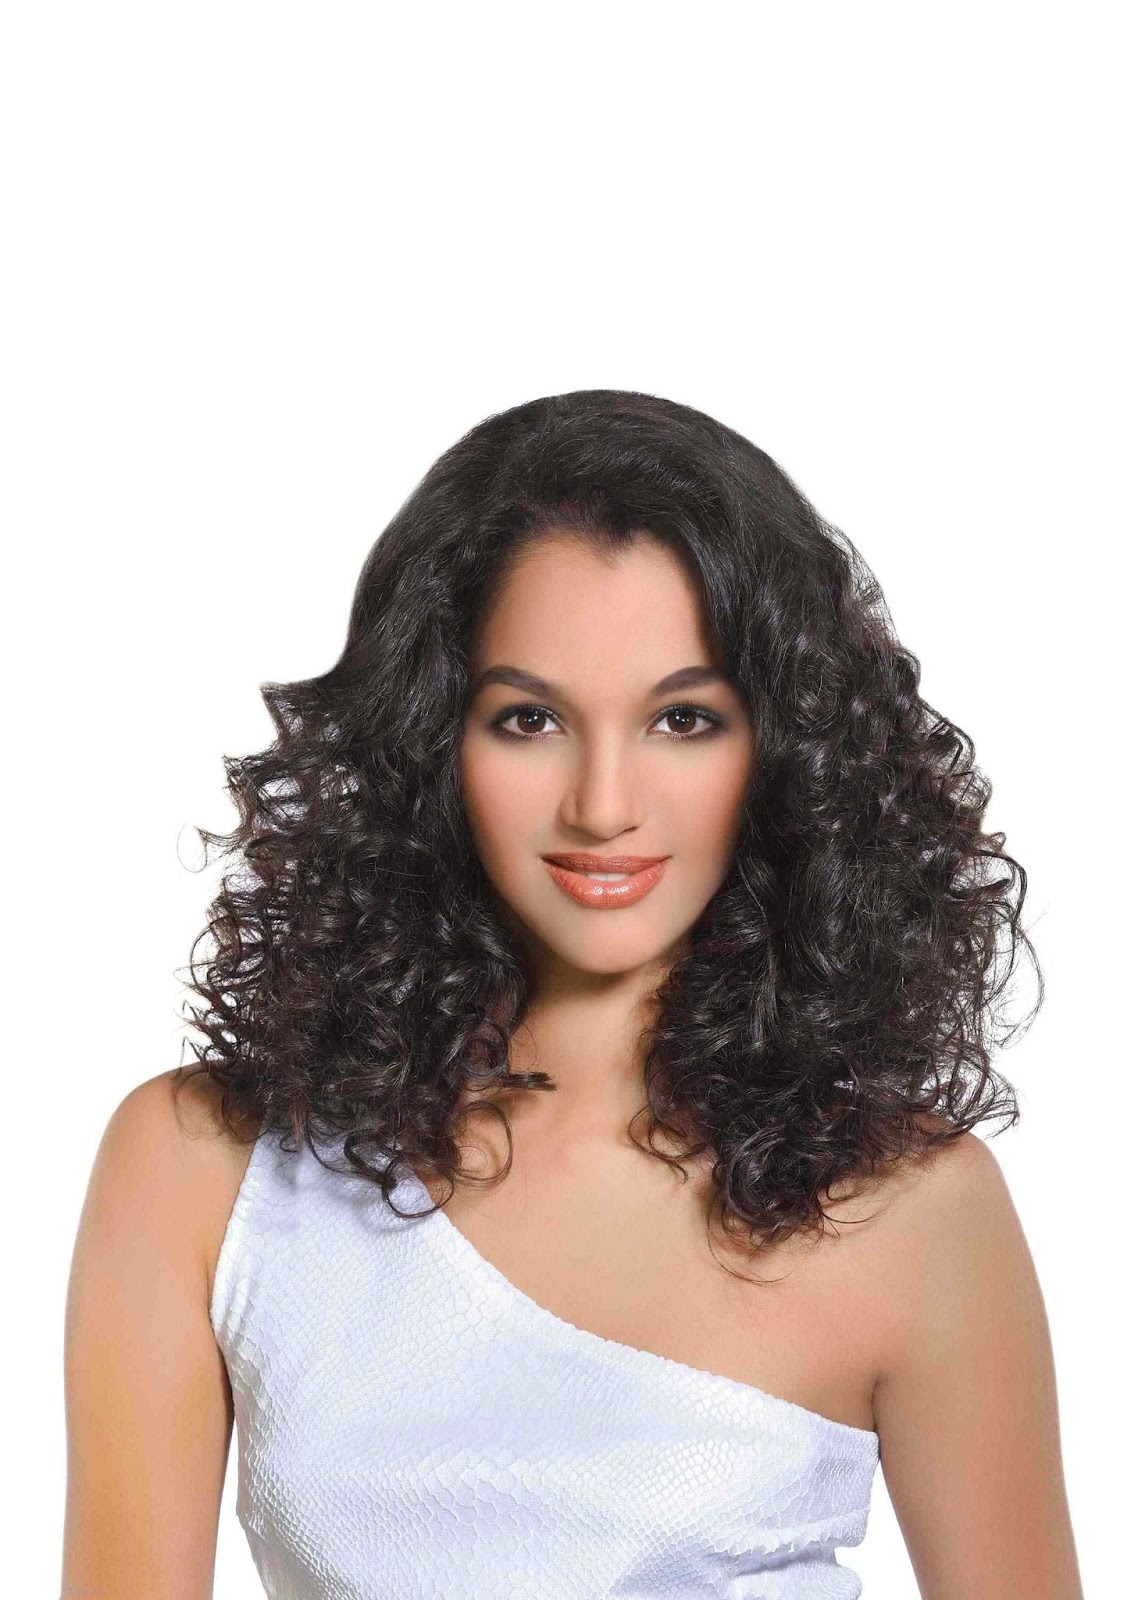 Black Natural Curly Hairstyles Long Soft Hair